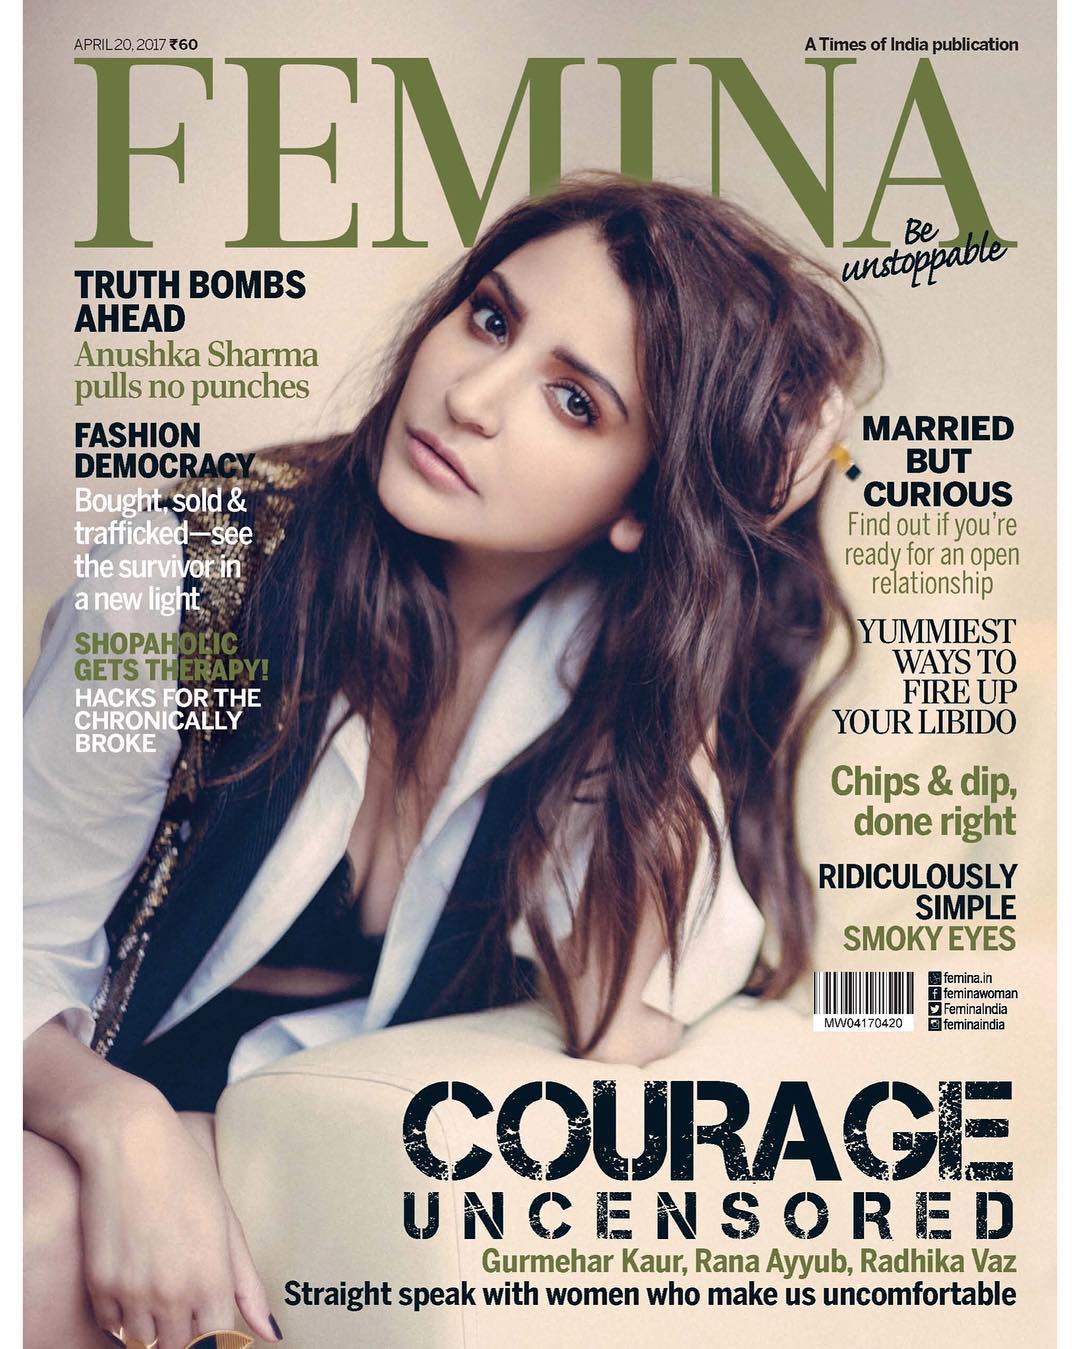 Anushka Sharma On The Cover For Femina India Magazine April 2017 | News